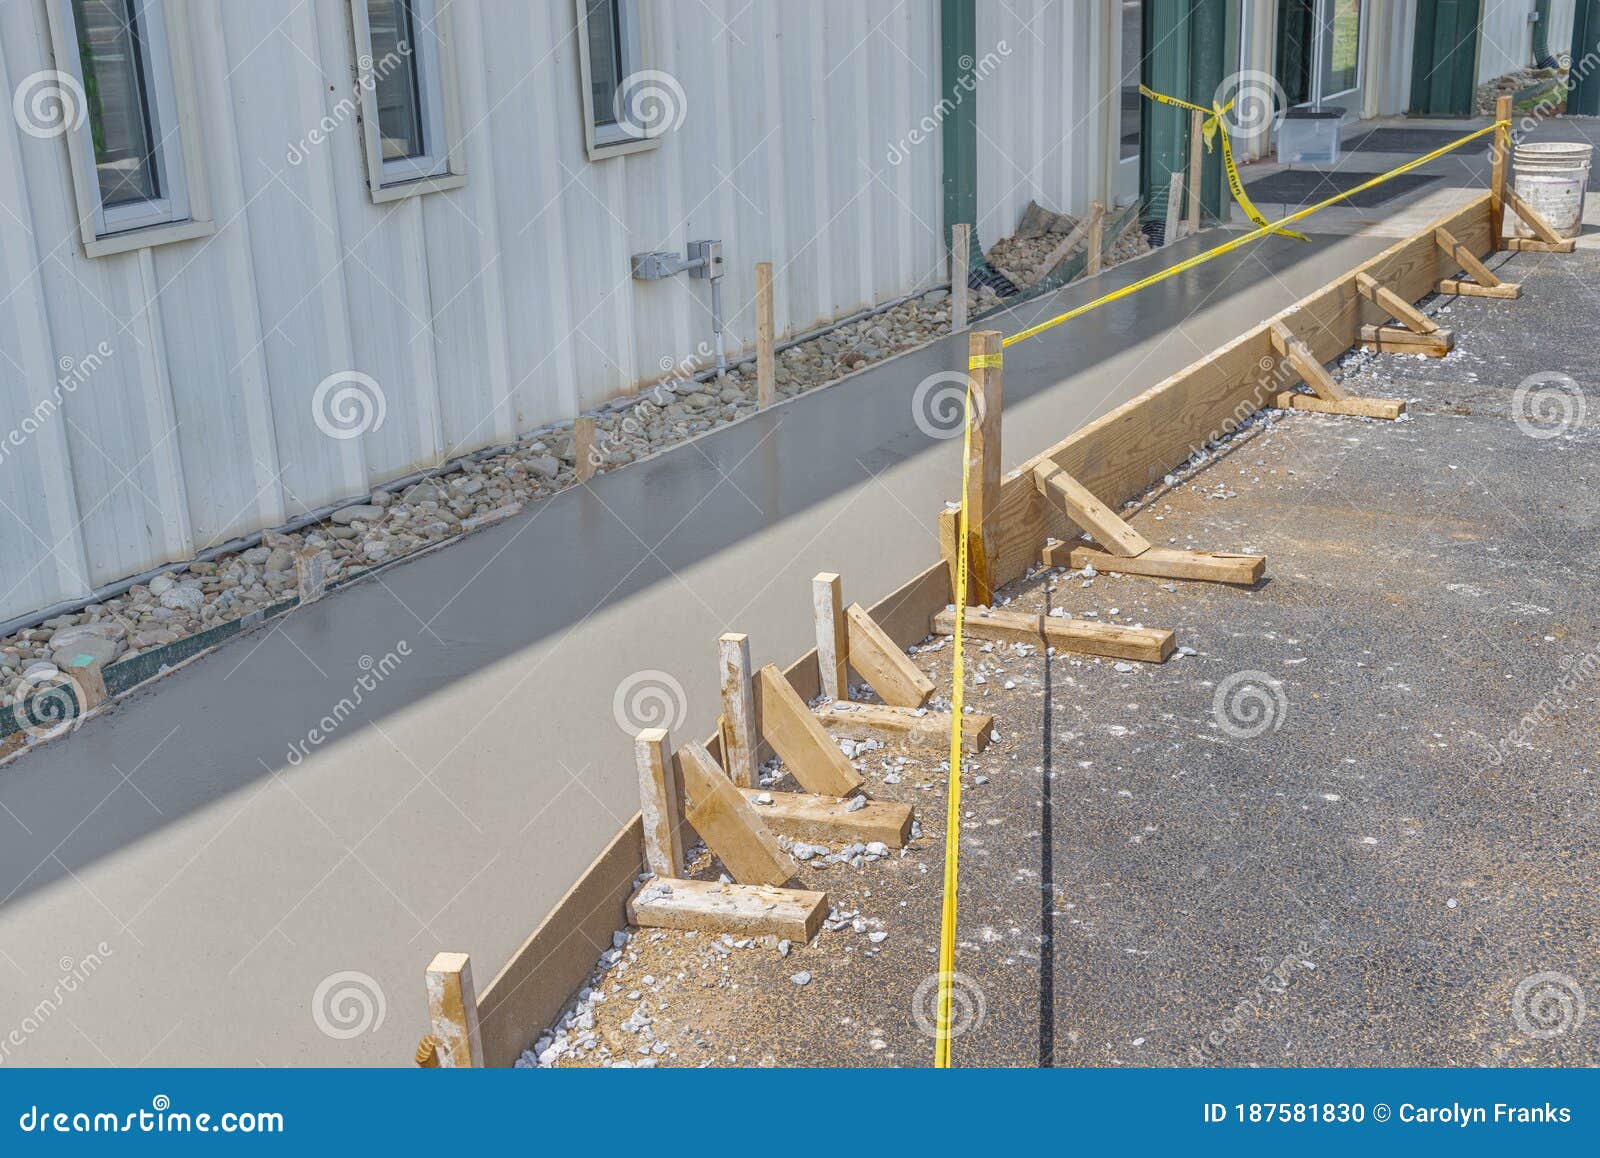 caution tape guards a freshly poured concrete sidewalk